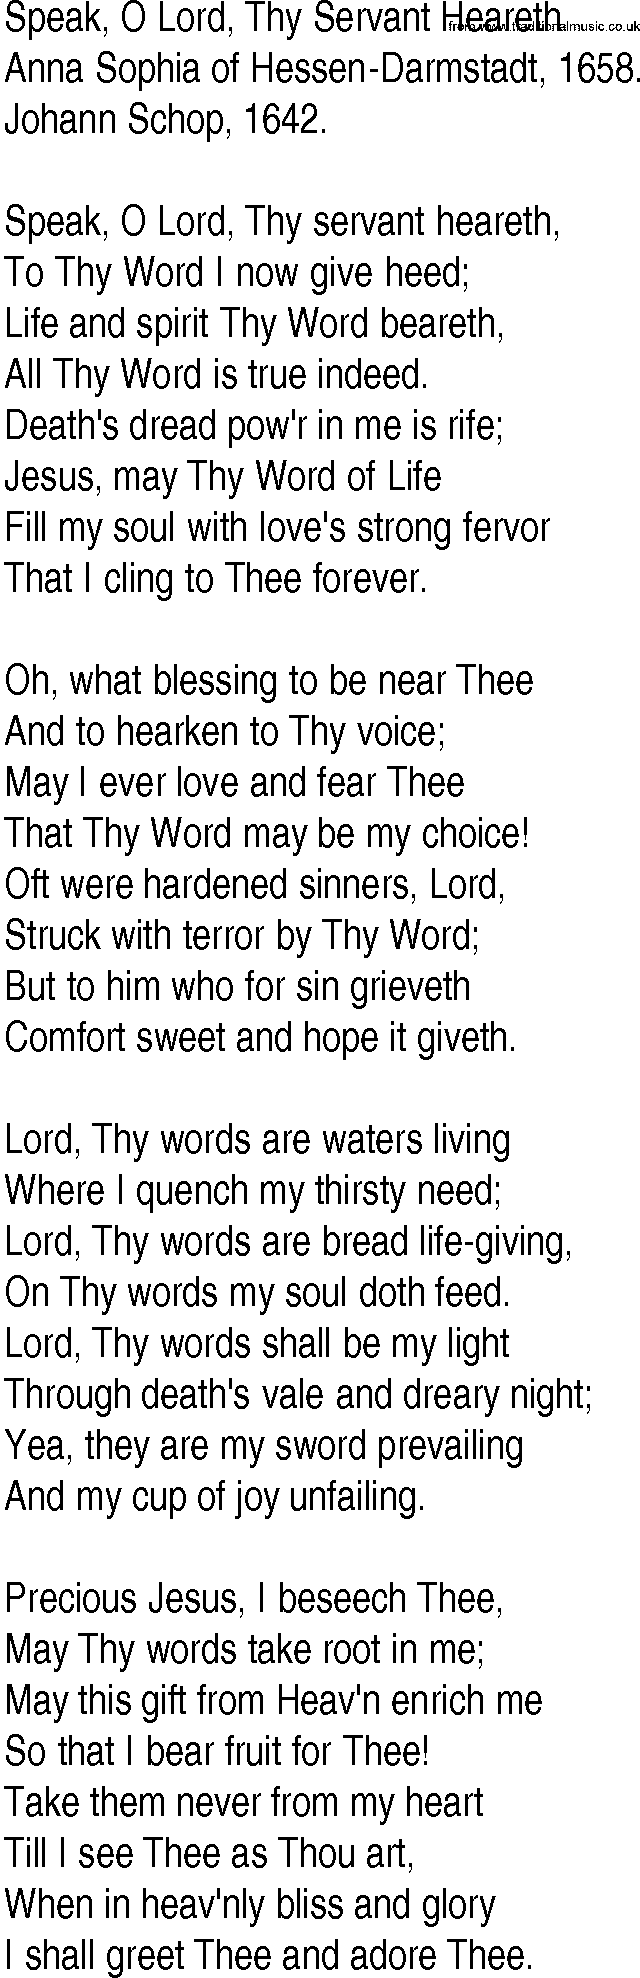 Hymn and Gospel Song: Speak, O Lord, Thy Servant Heareth by Anna Sophia of HessenDarmstadt lyrics